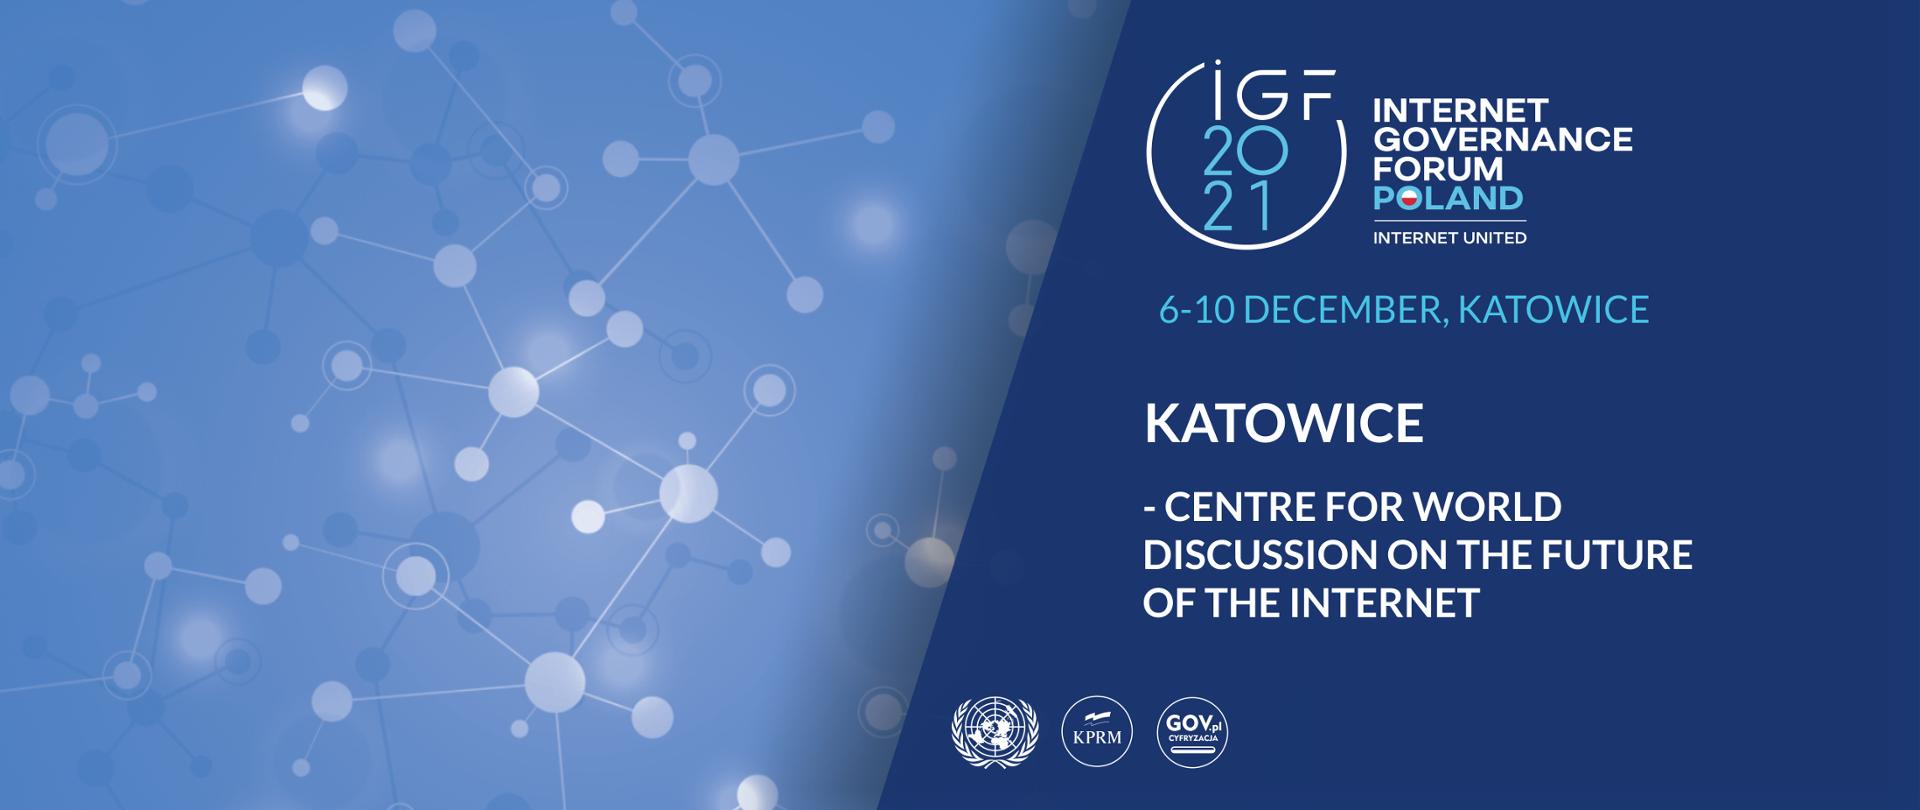 The UN Internet Governance Forum 